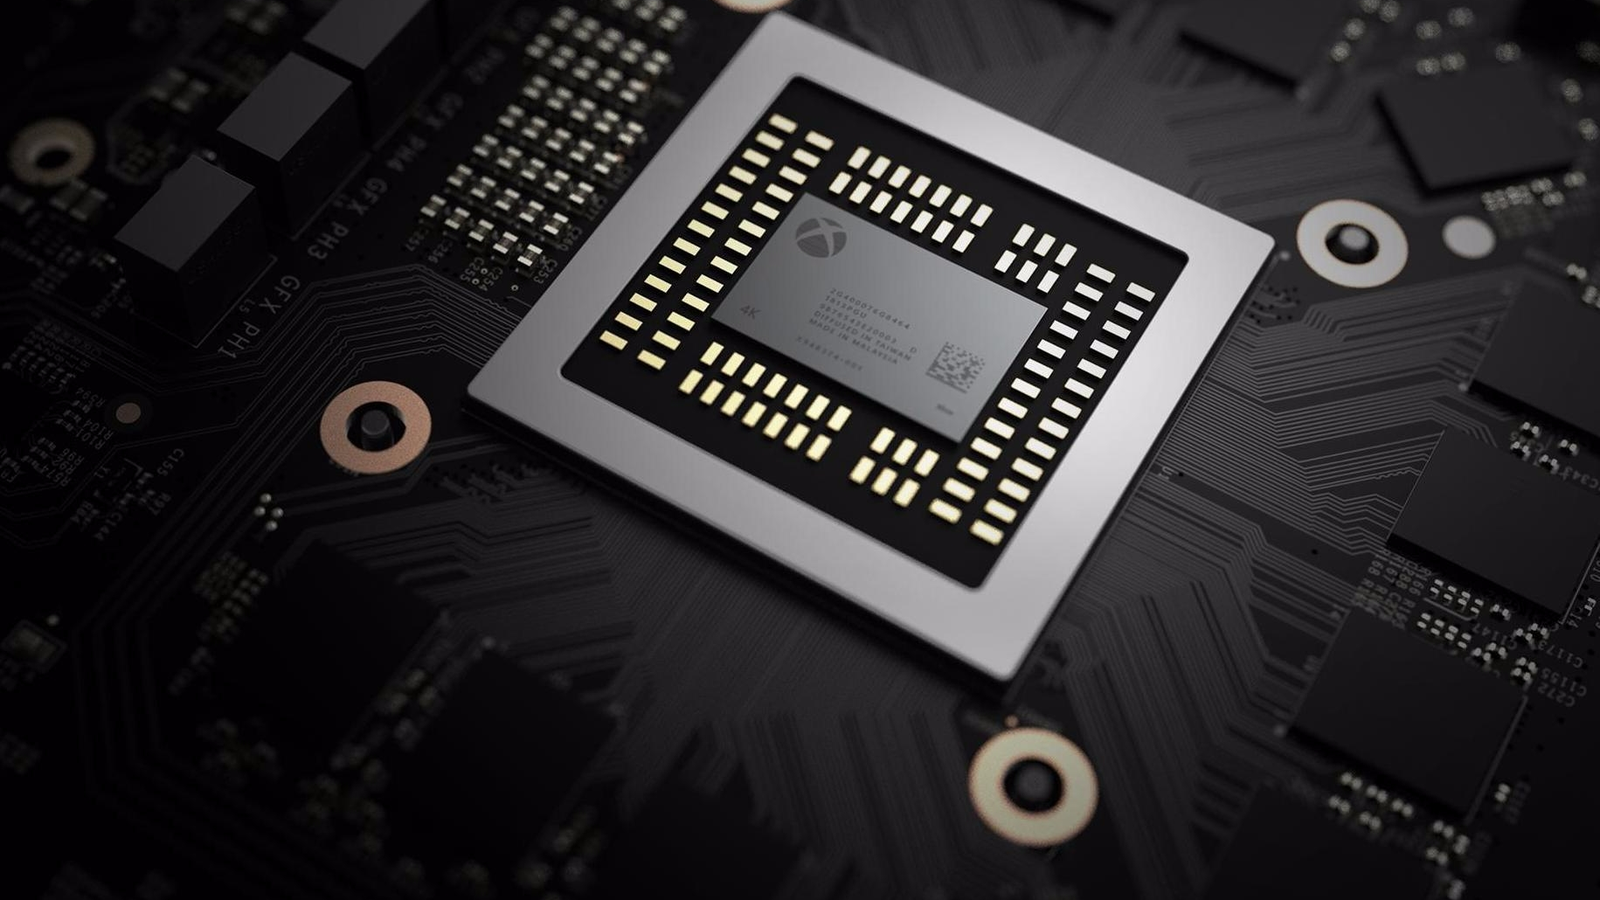 skolde kaste støv i øjnene have Inside the next Xbox: Project Scorpio tech revealed | Eurogamer.net